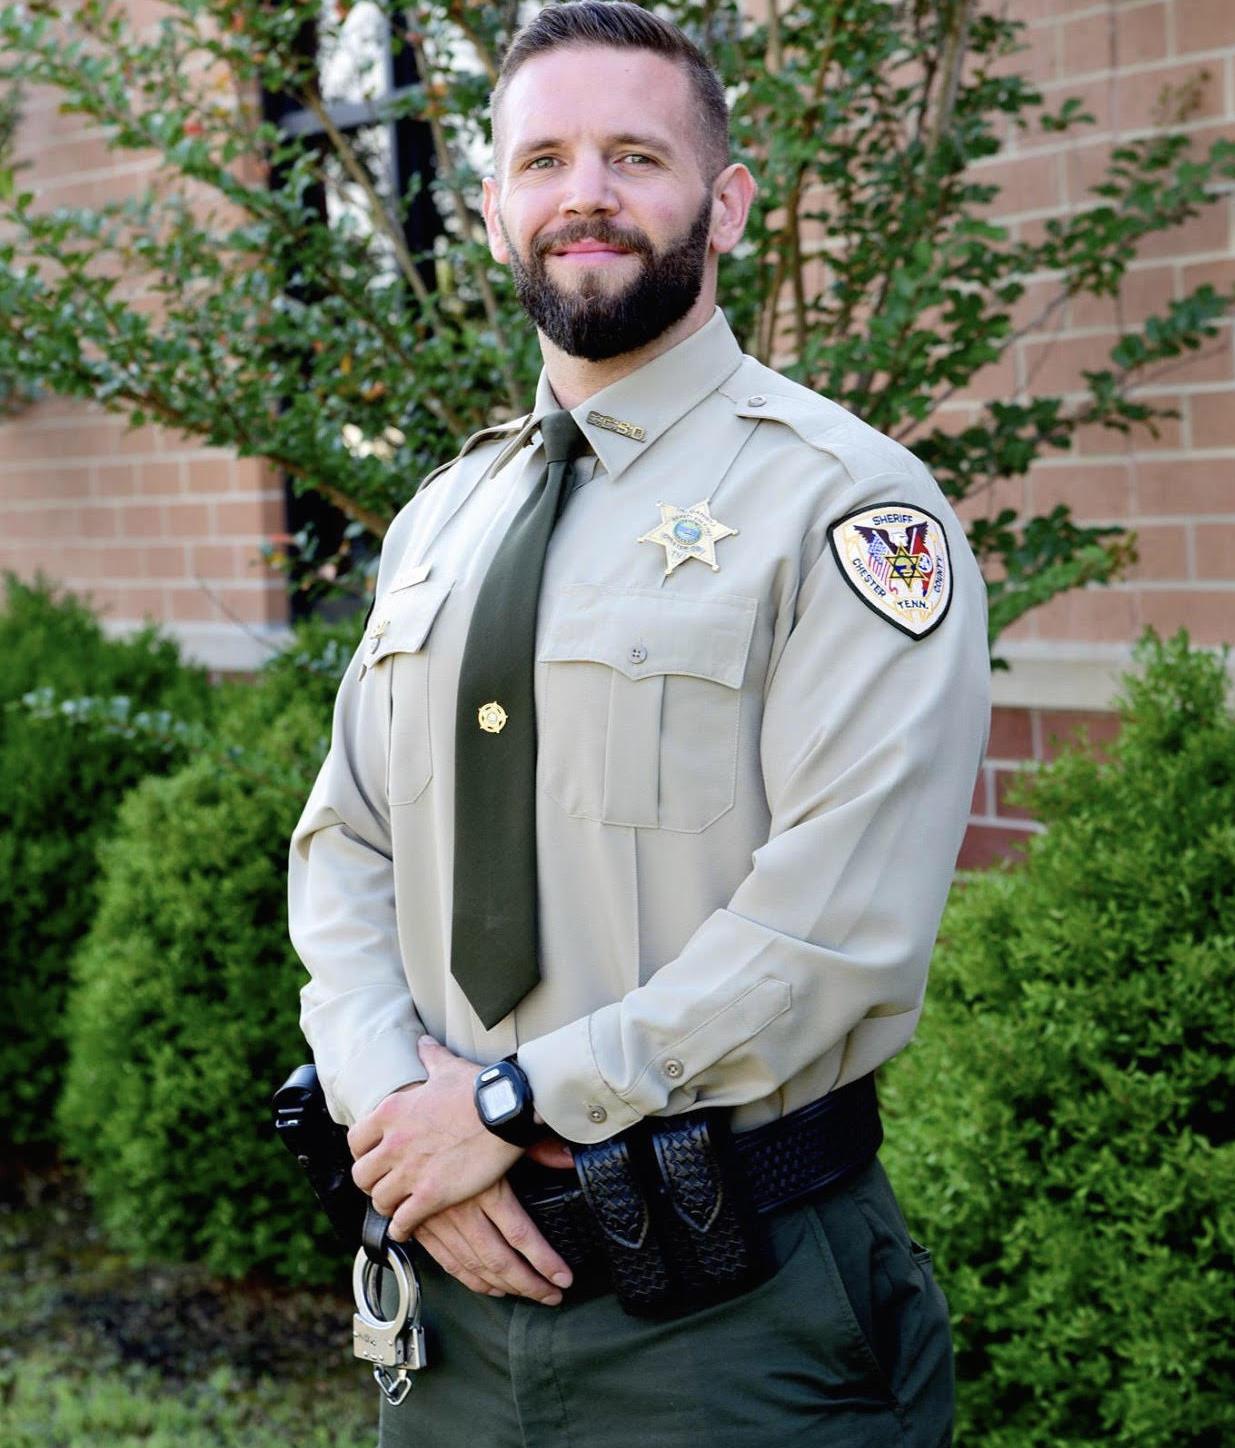 Deputy Nathan Daniel